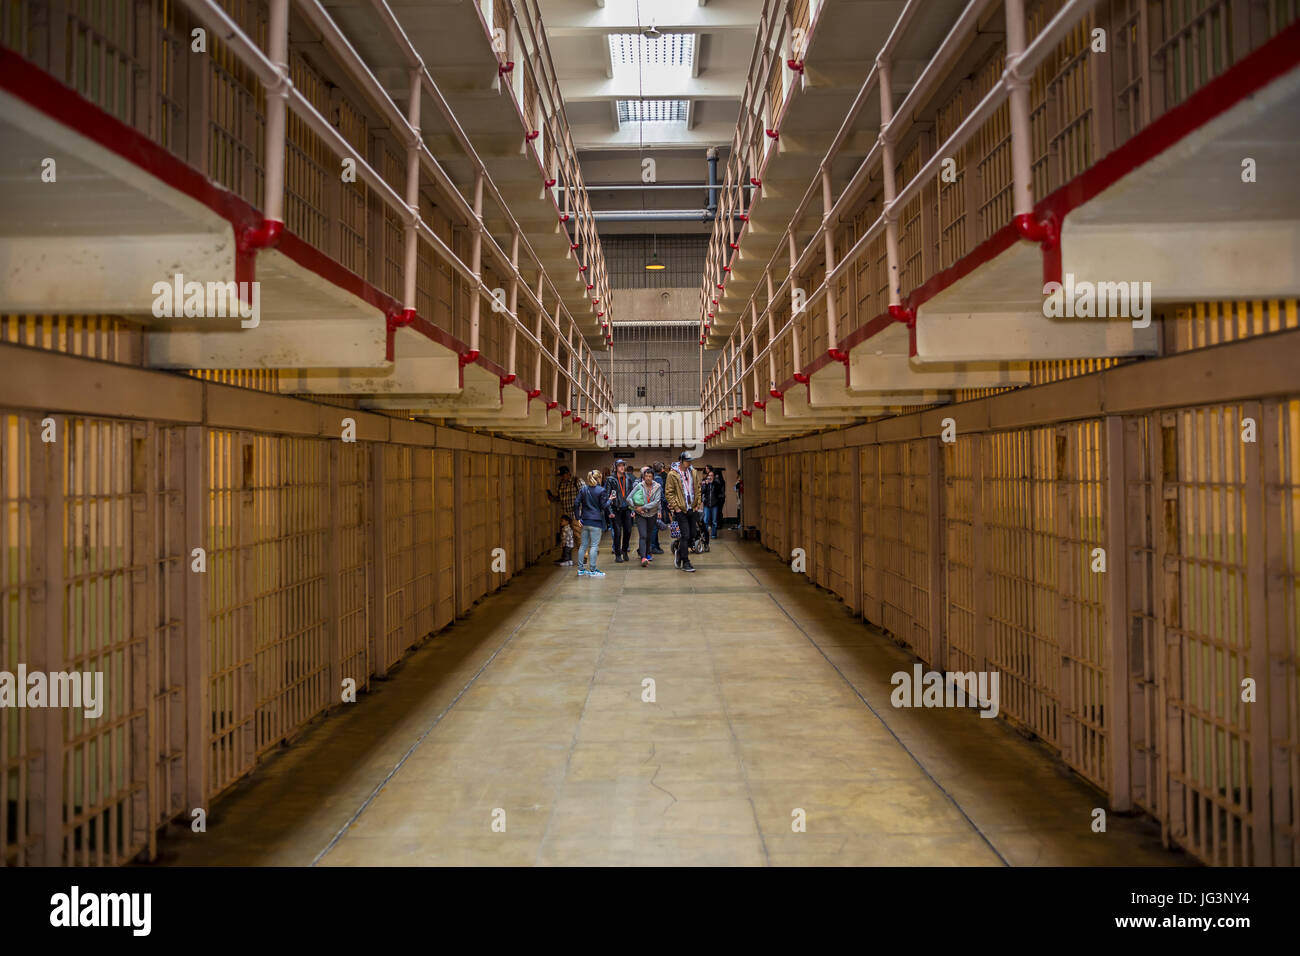 people, tourists, cellblock, cellhouse, Alcatraz Prison, United States Penitentiary, Alcatraz Island, San Francisco Bay, San Francisco, California Stock Photo